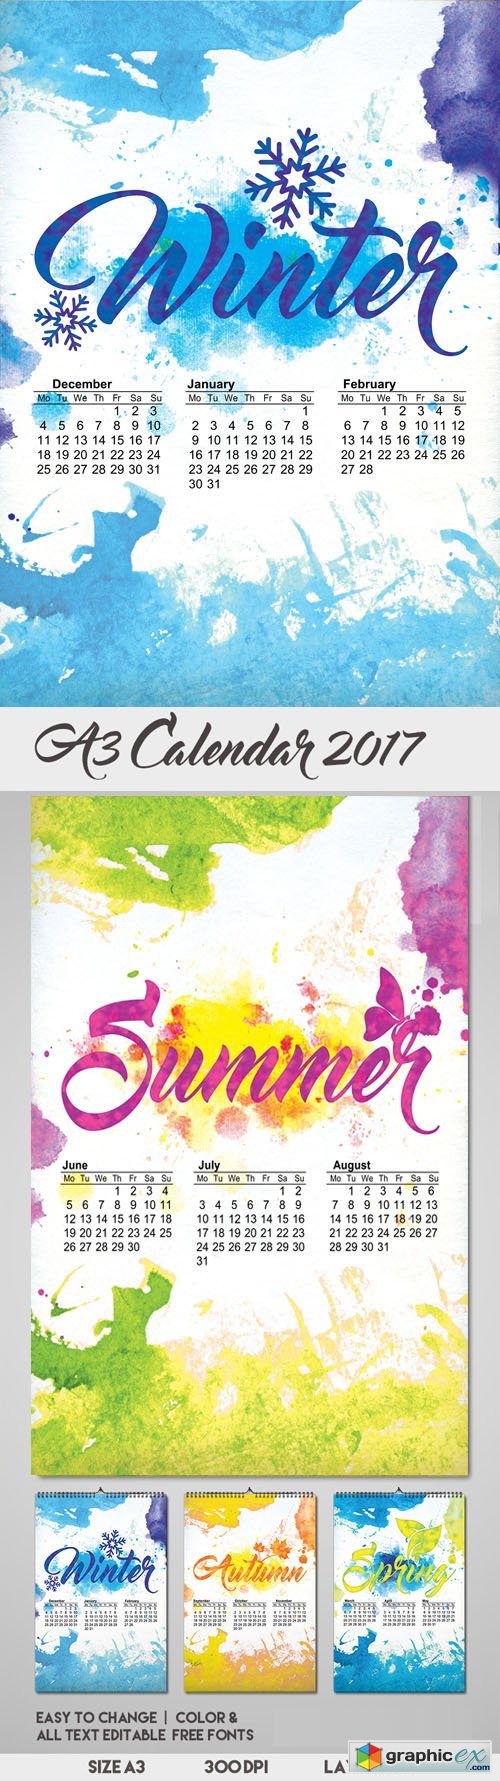 A3 Calendar 2017 PSD Templates